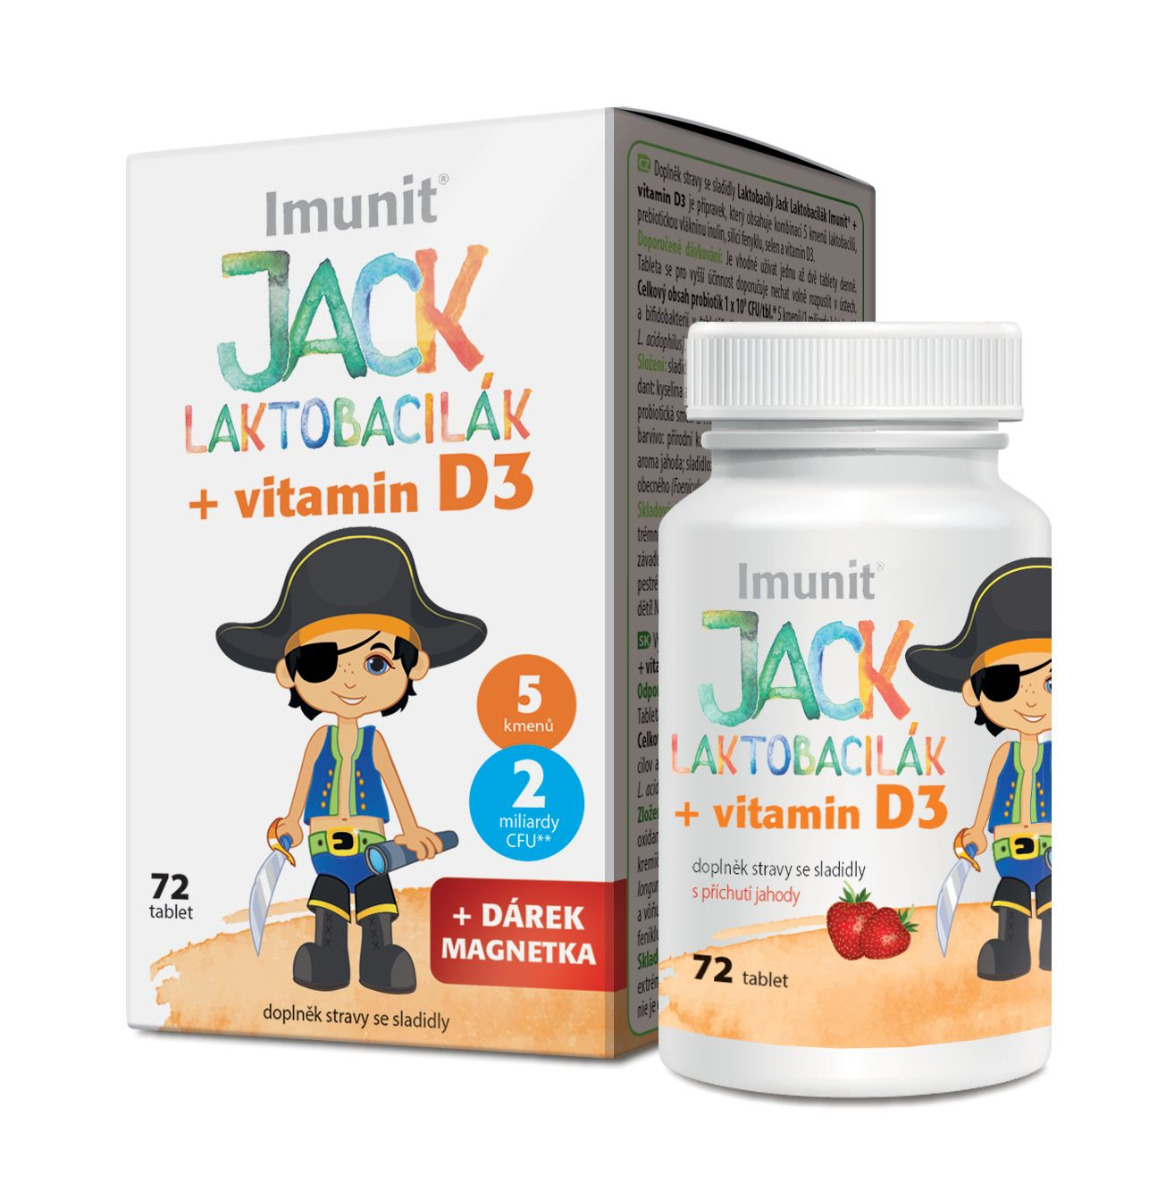 Imunit Laktobacily JACK LAKTOBACILÁK + vitamin D3 72 tablet Imunit